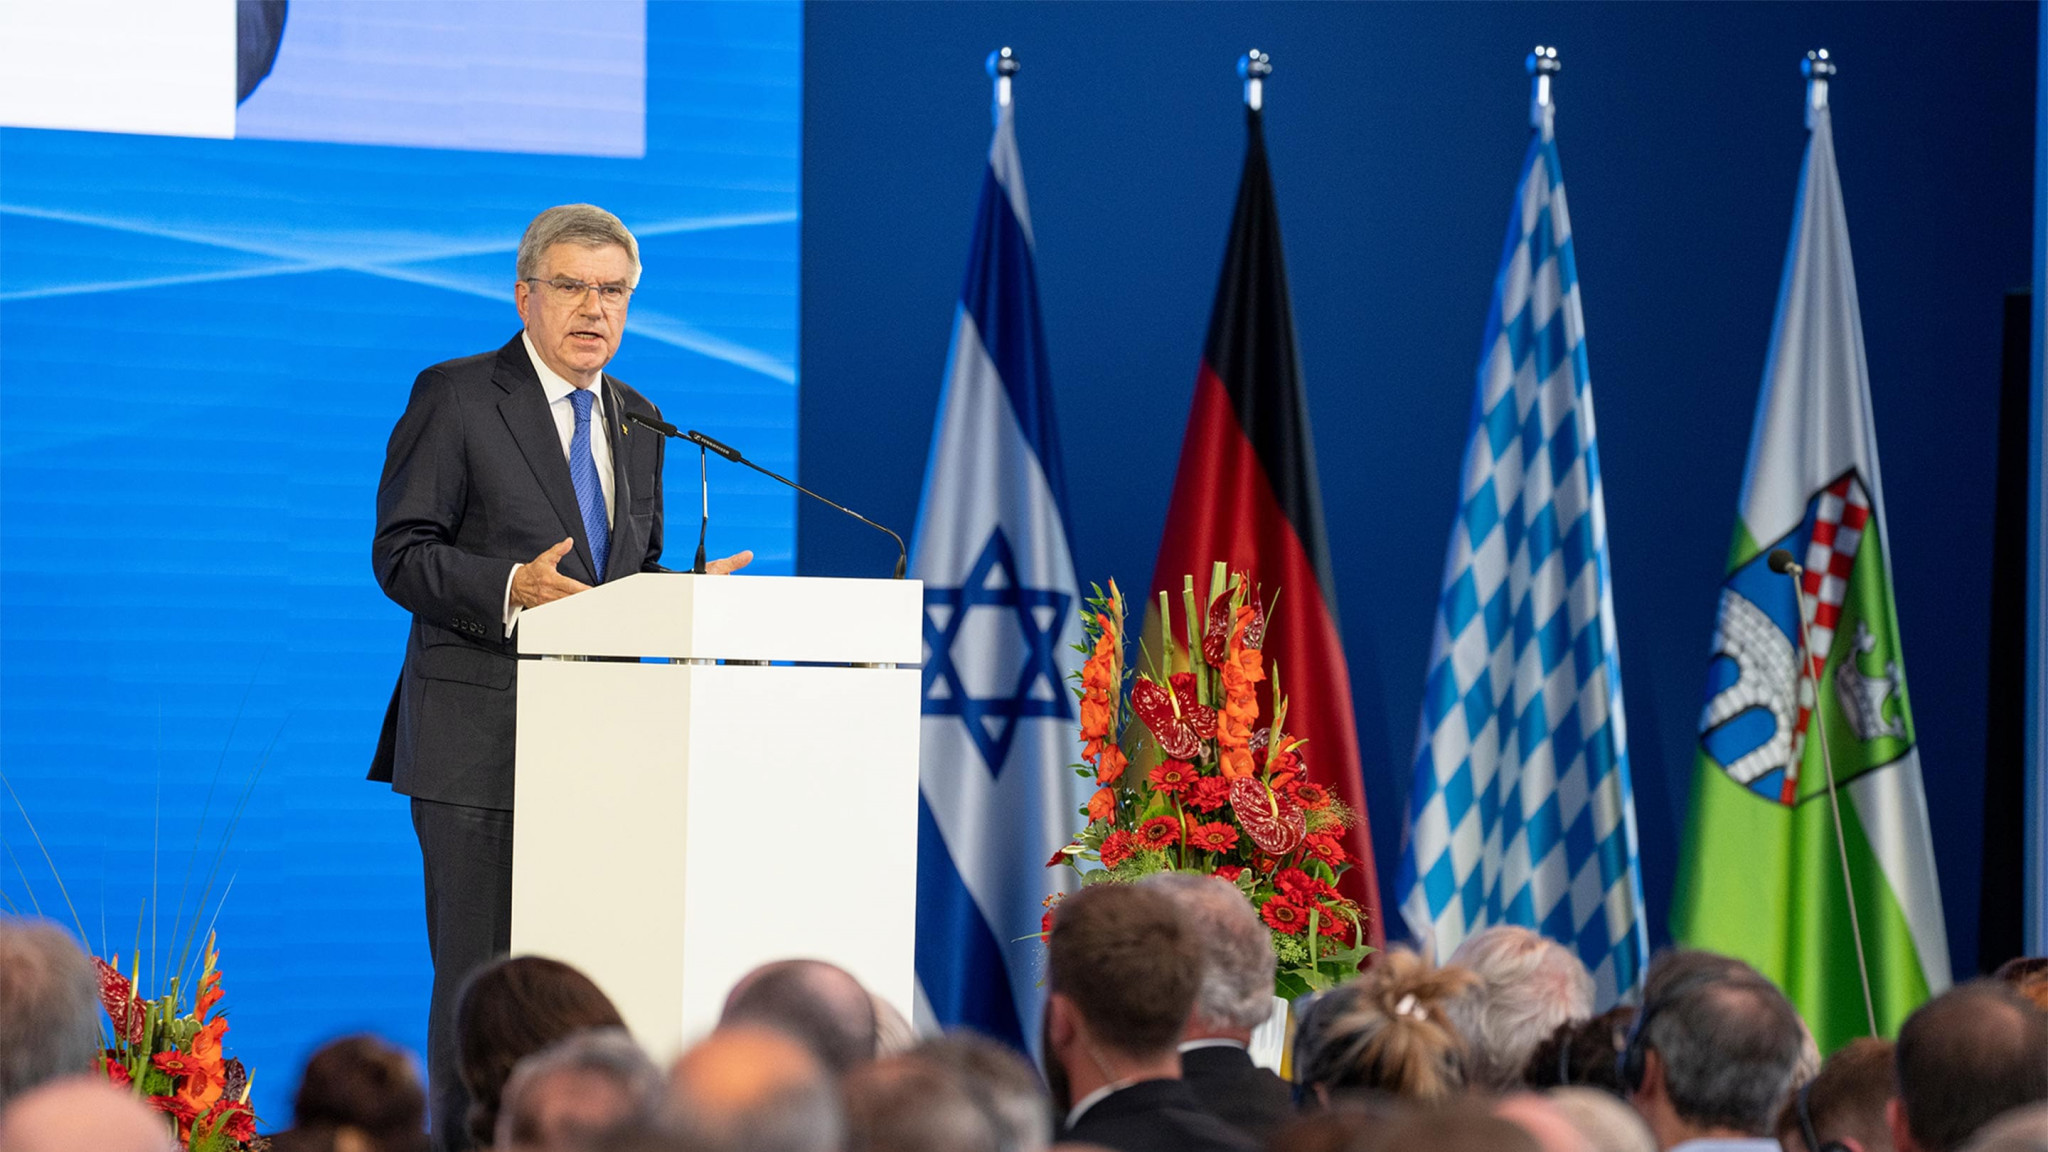 IOC President Bach welcomes German Government's decision to investigate Munich 1972 terror attack